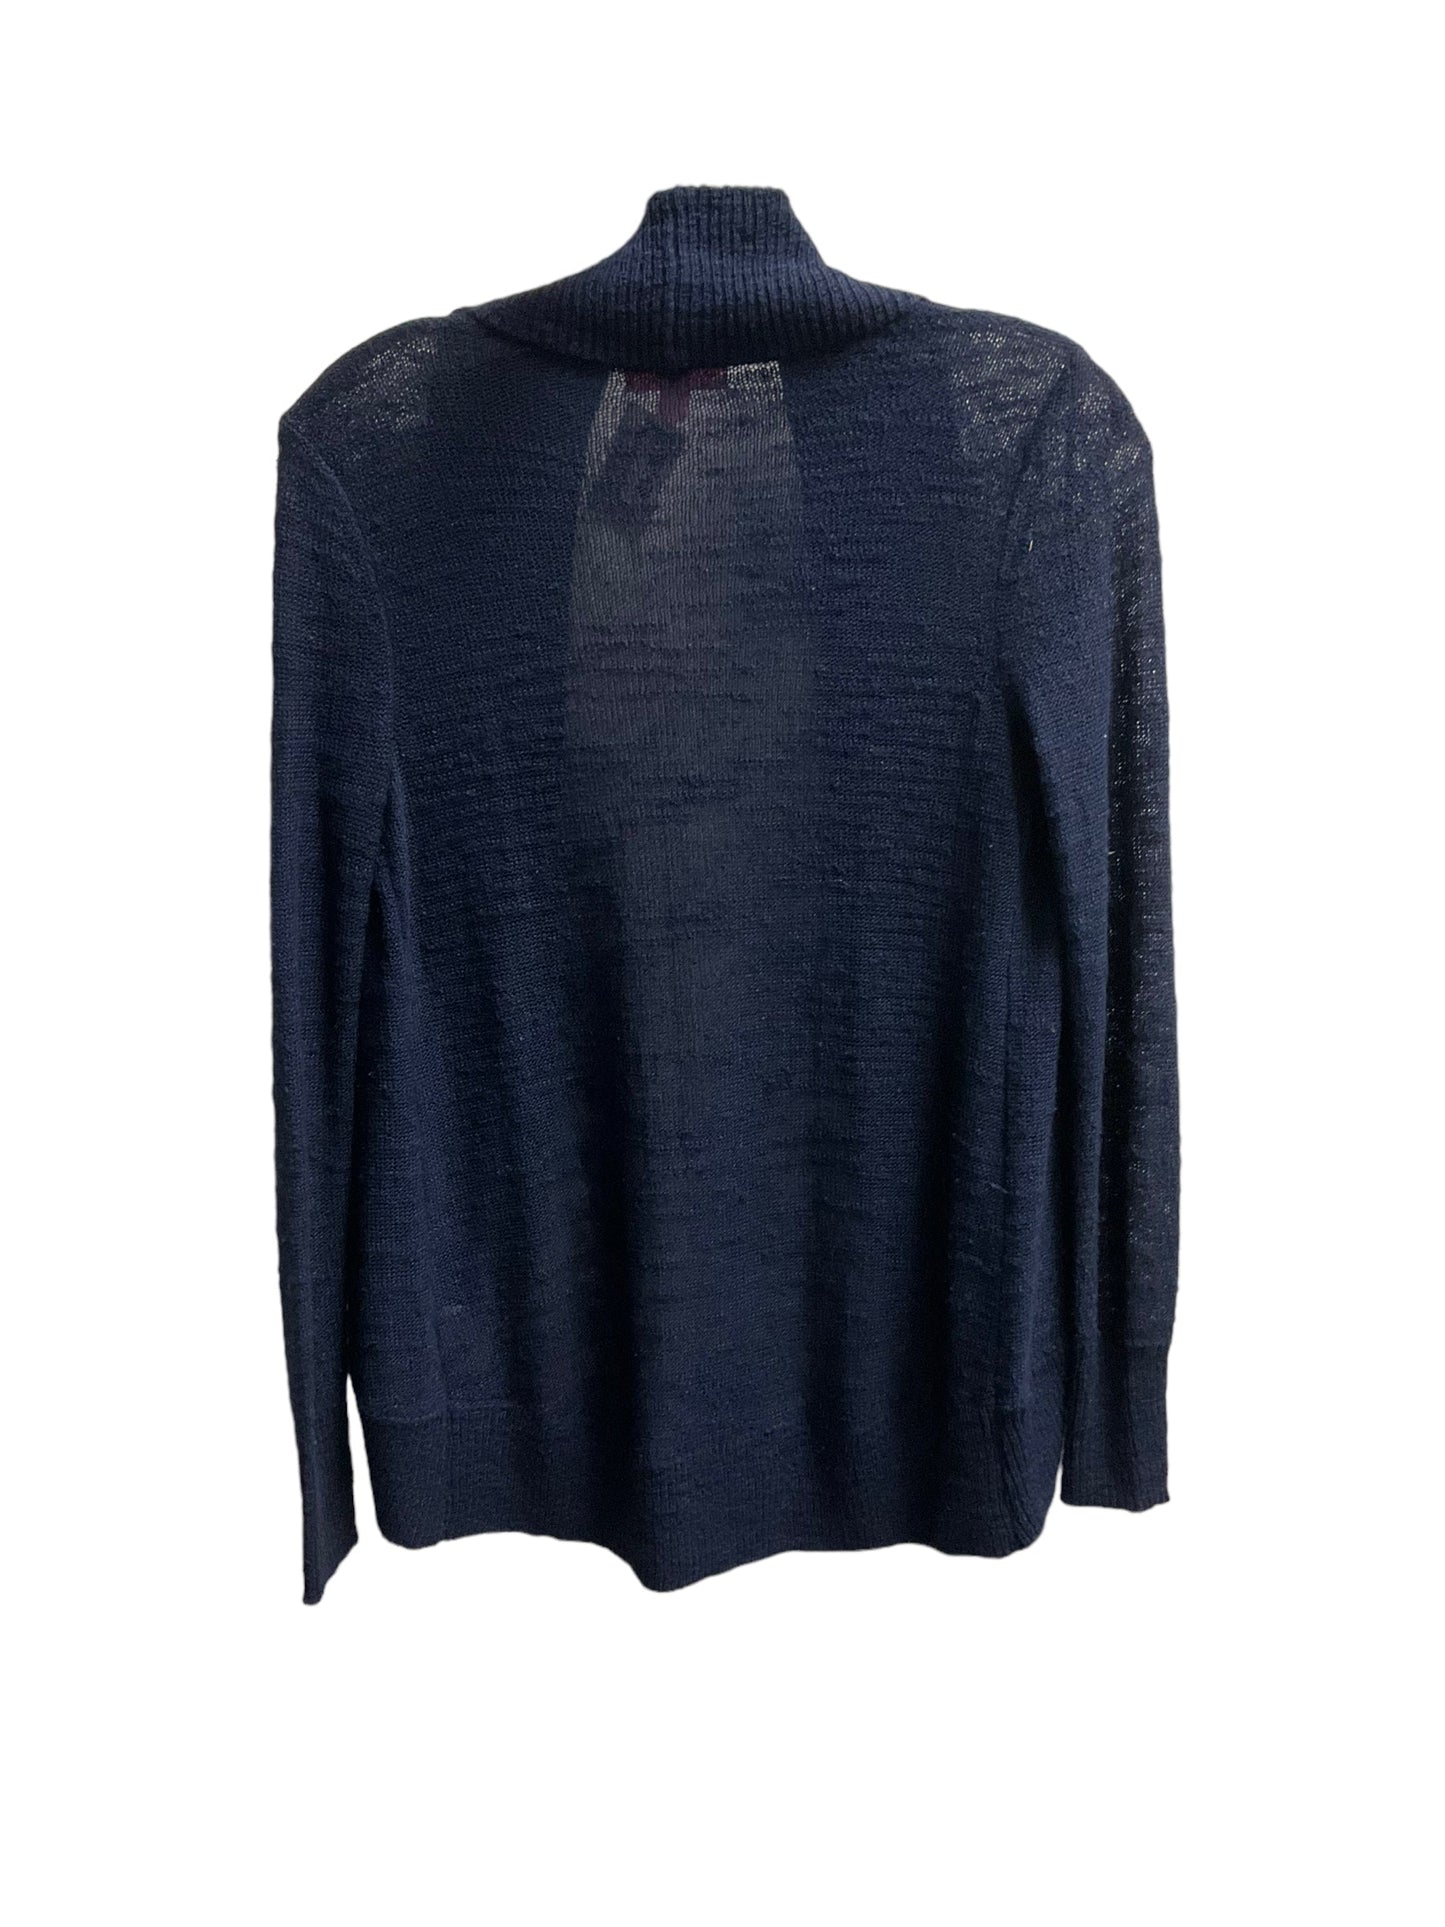 Sweater By Lilly Pulitzer  Size: Xxs